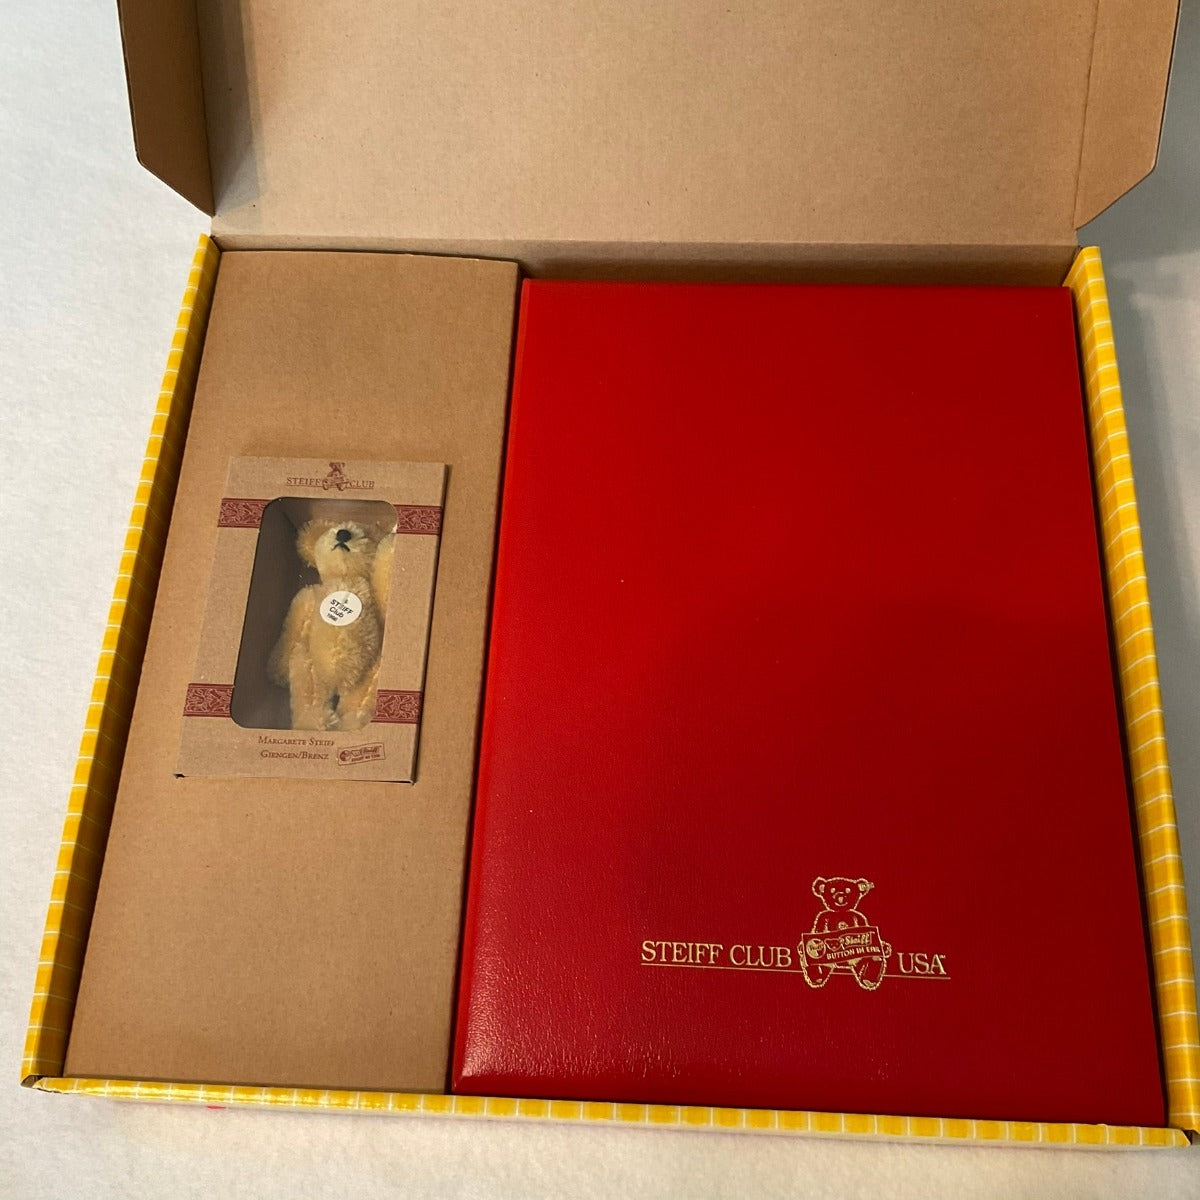 1998 Steiff Club Gift Membership Kit - Inside Box